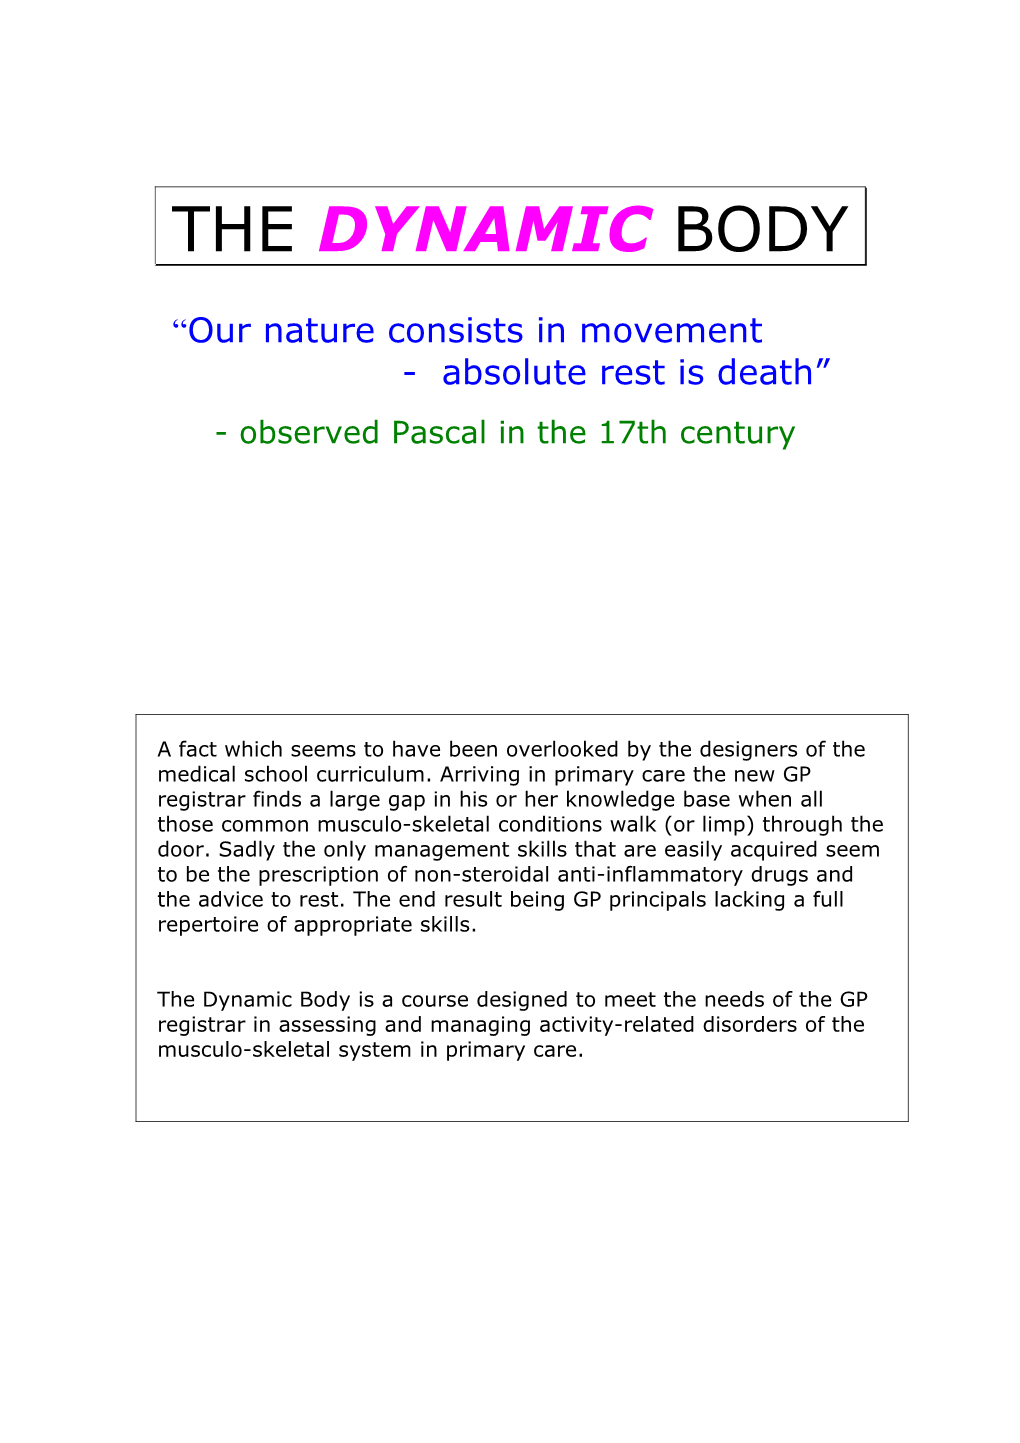 The Dynamic Body